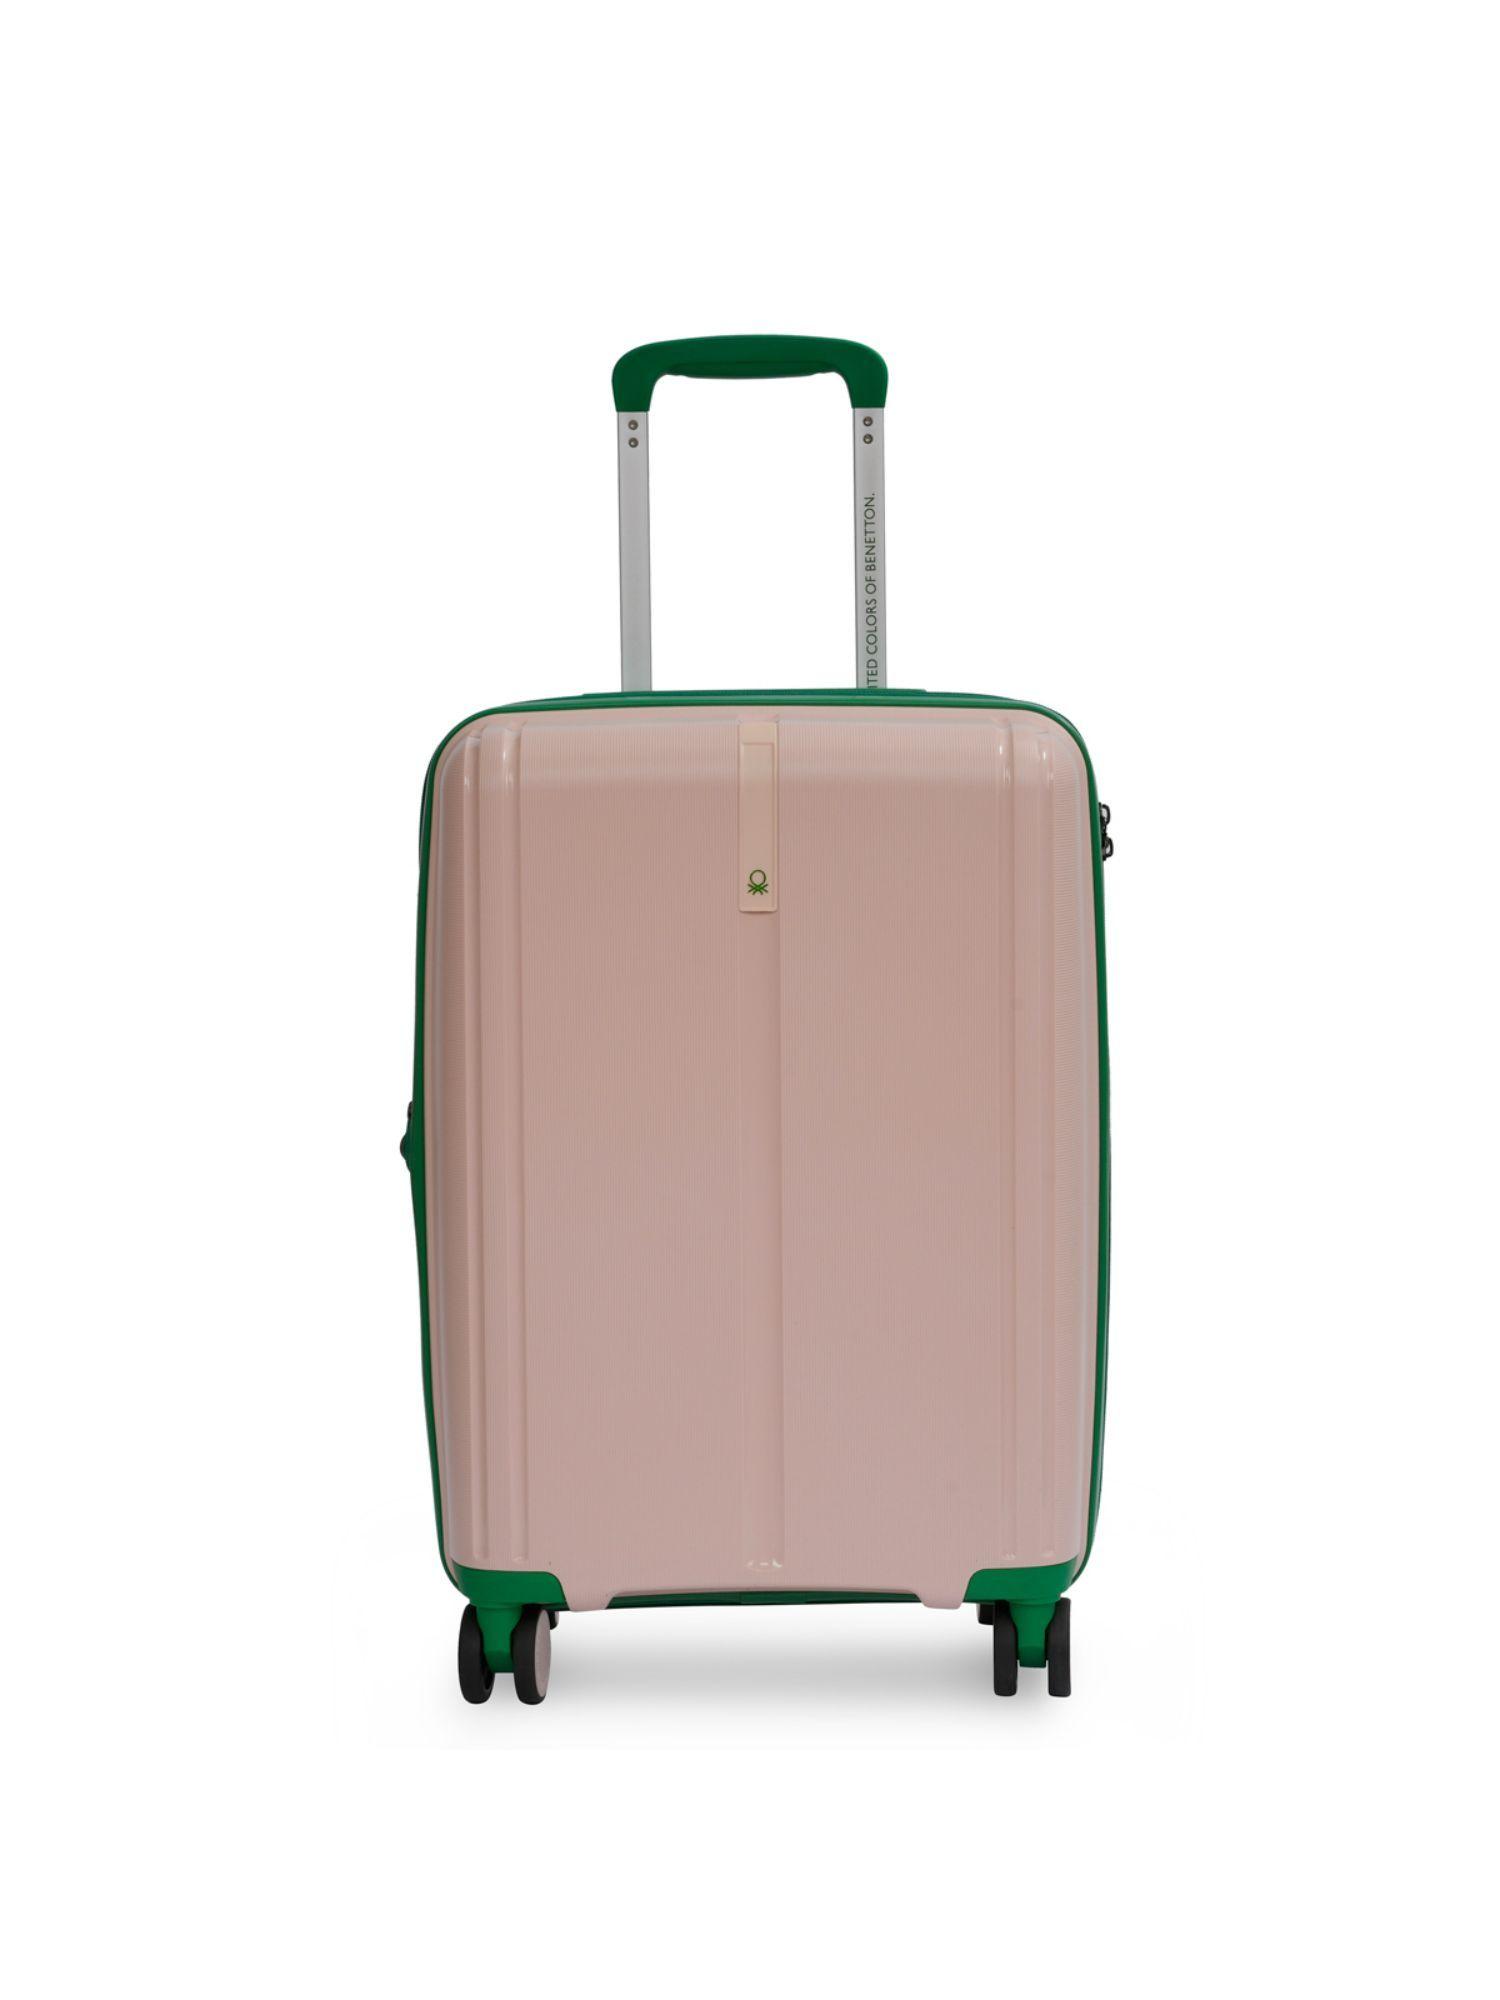 unisex hard luggage baby pink tsa lock trolley bag